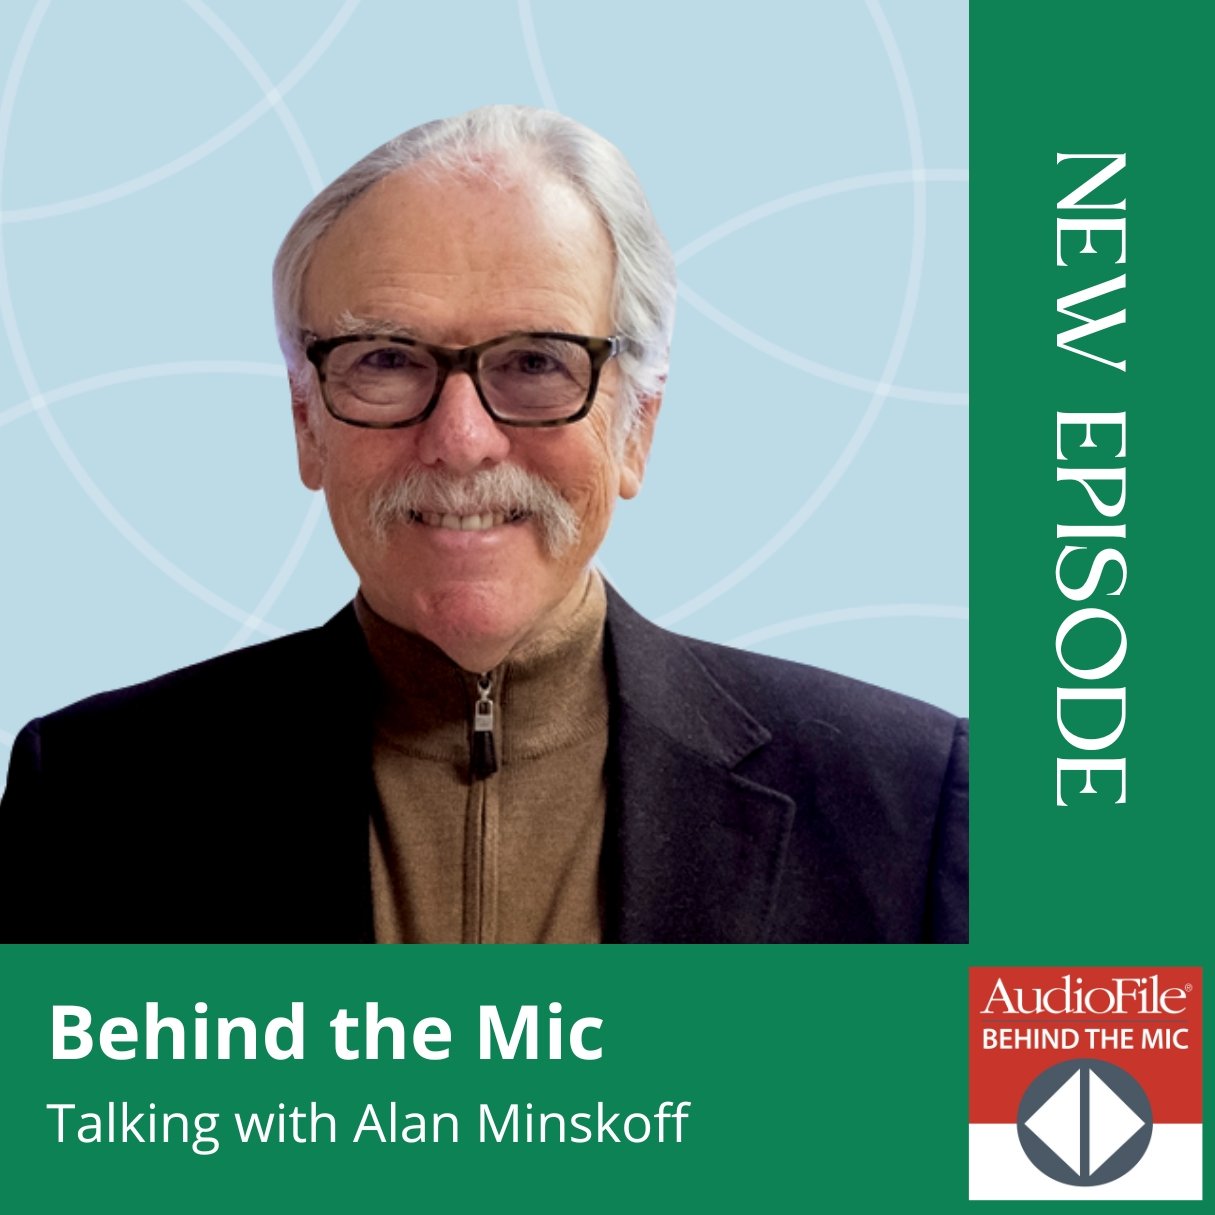 Meet Alan Minskoff - Celebrating 1500 episodes of Behind the Mic